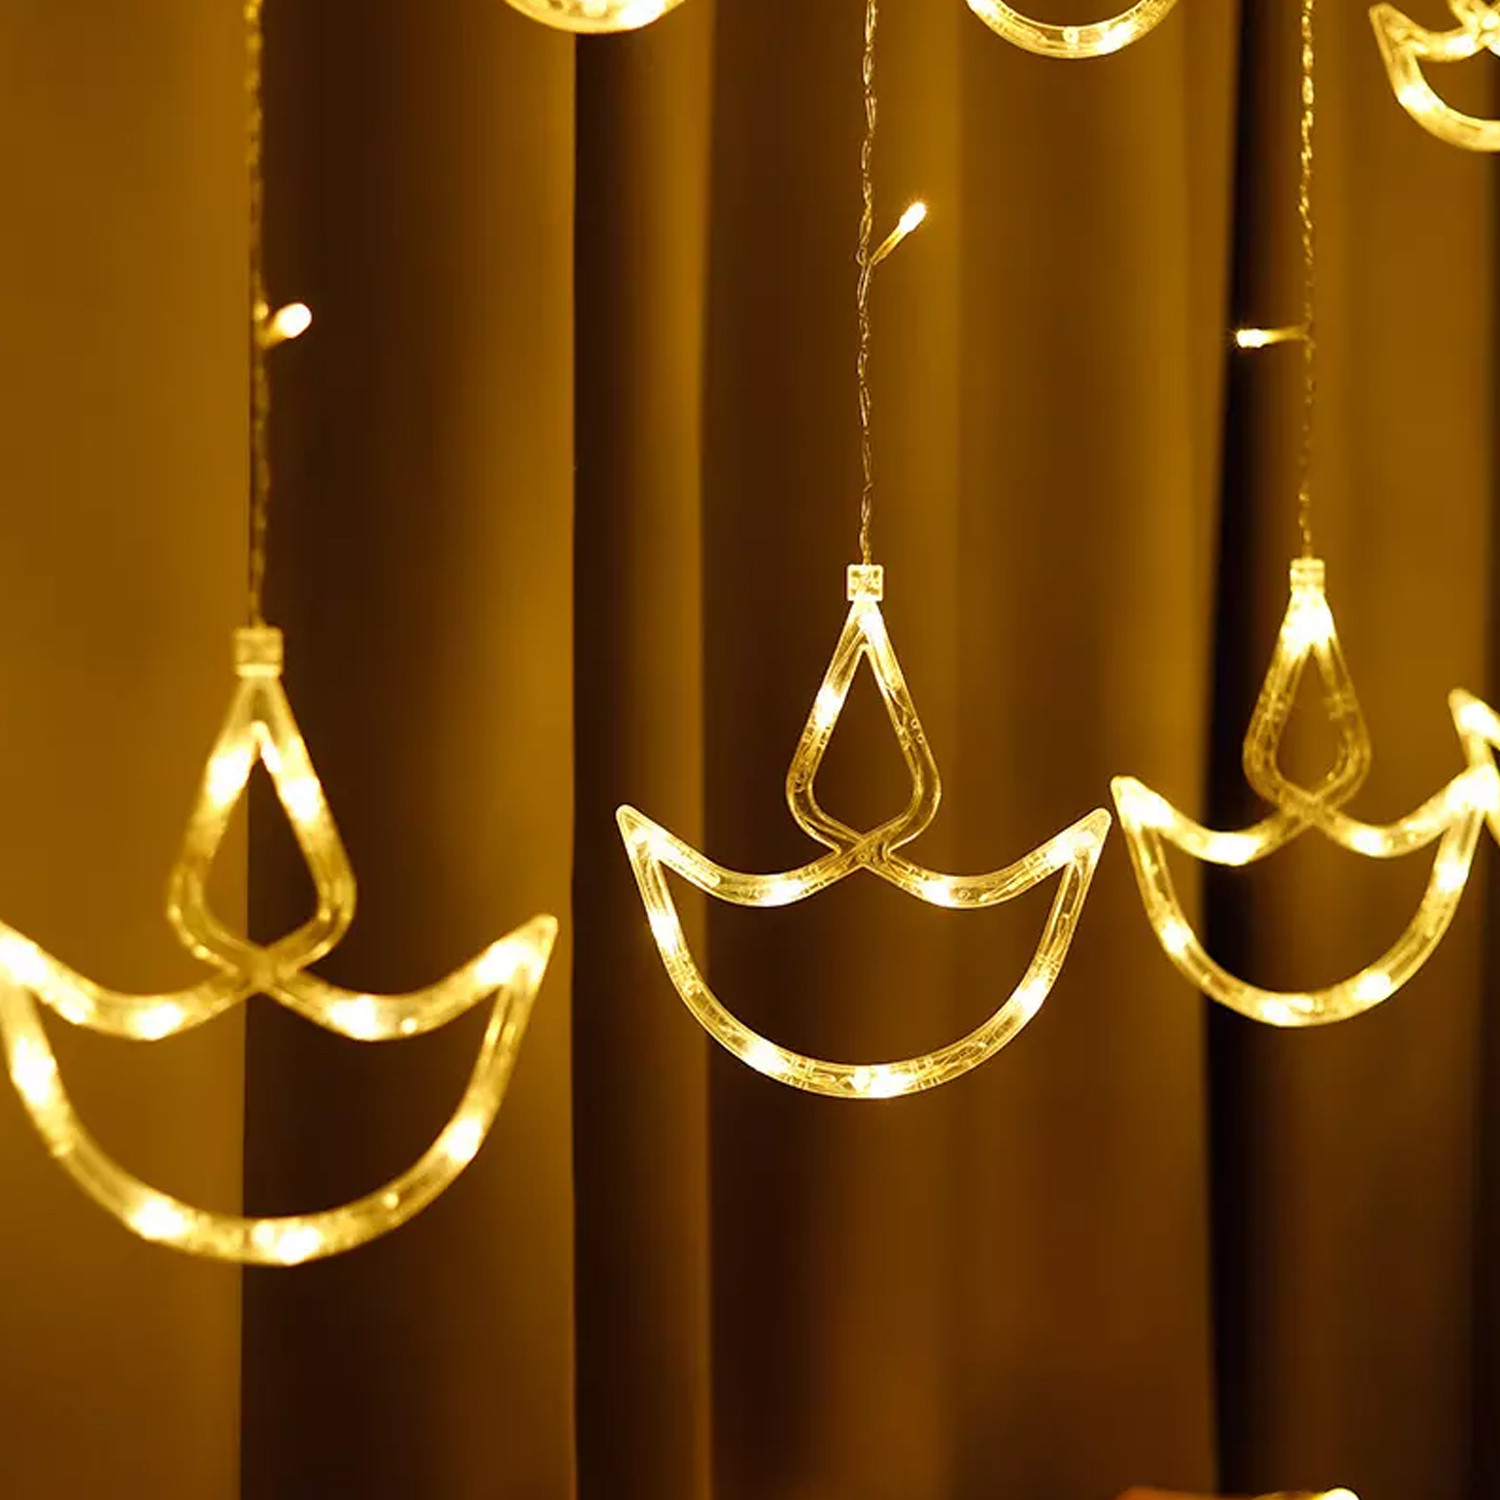 Kuber Industries Diya Shape String Lights|6 Big And 6 Small Window Decoration Lights|String Fairy Lights For Christmas,New Year,Diwali (Warm White)